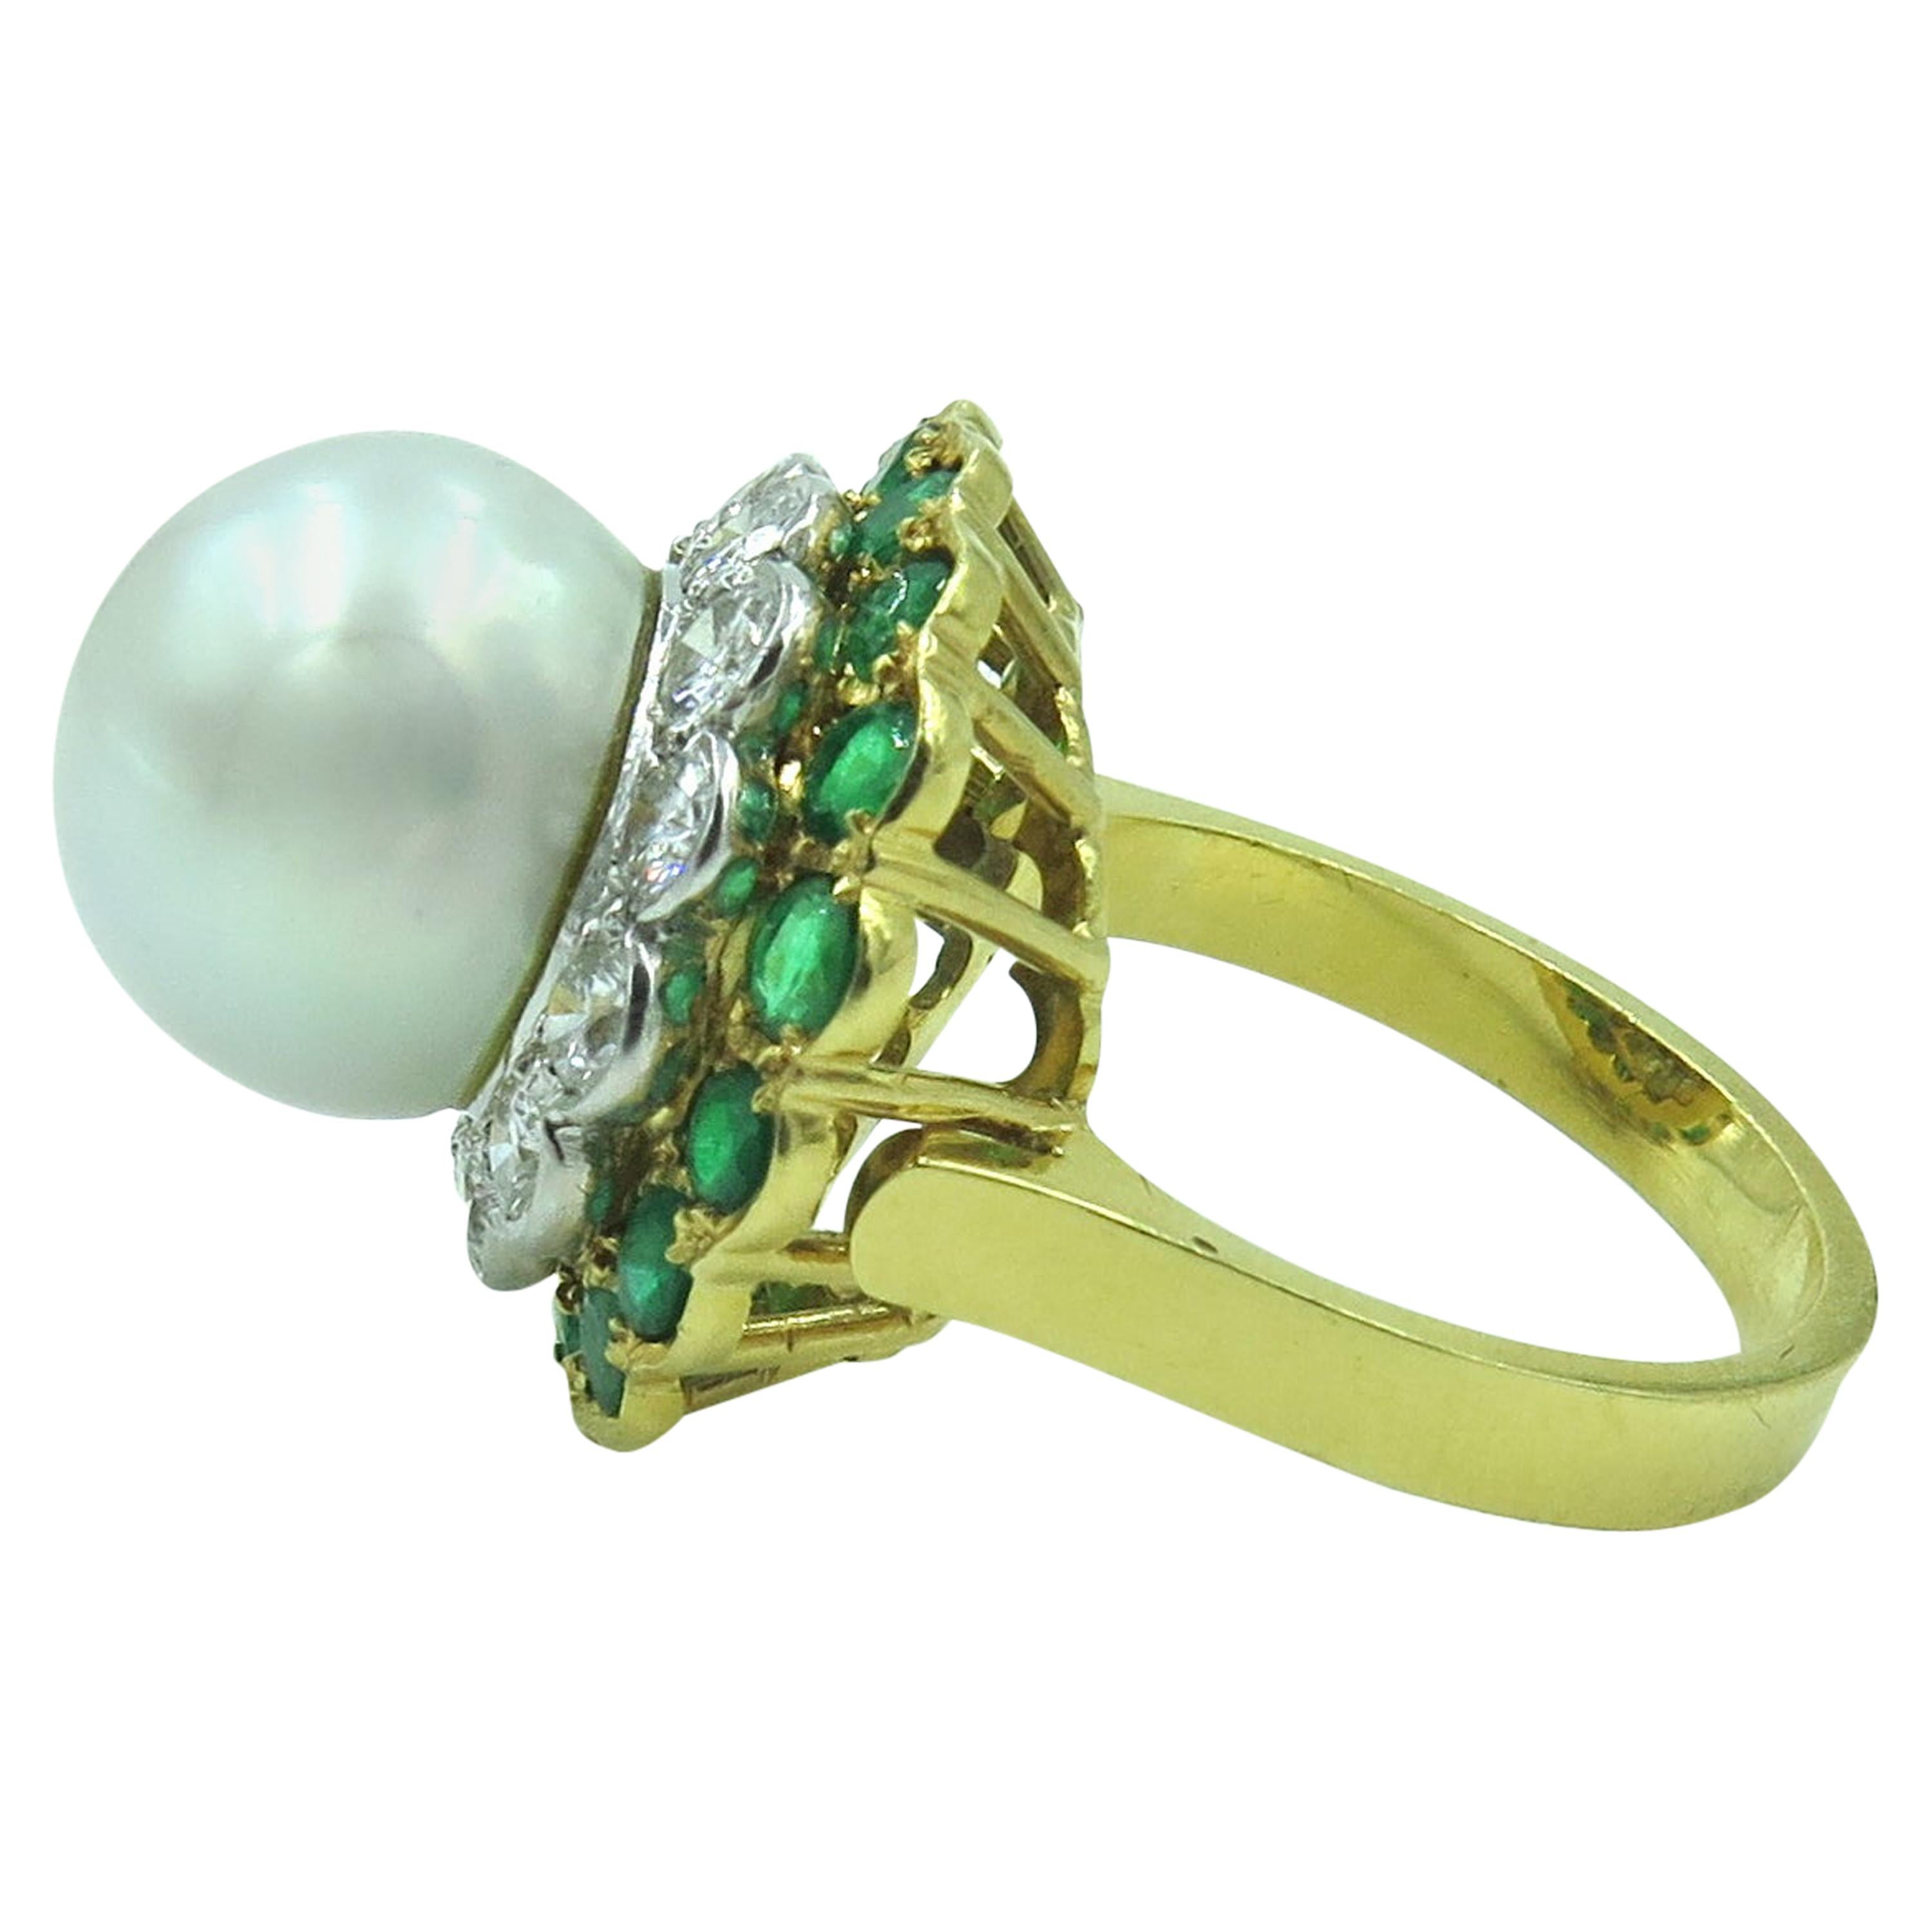 An 18 karat yellow gold, south sea pearl, diamond and emerald ring.  